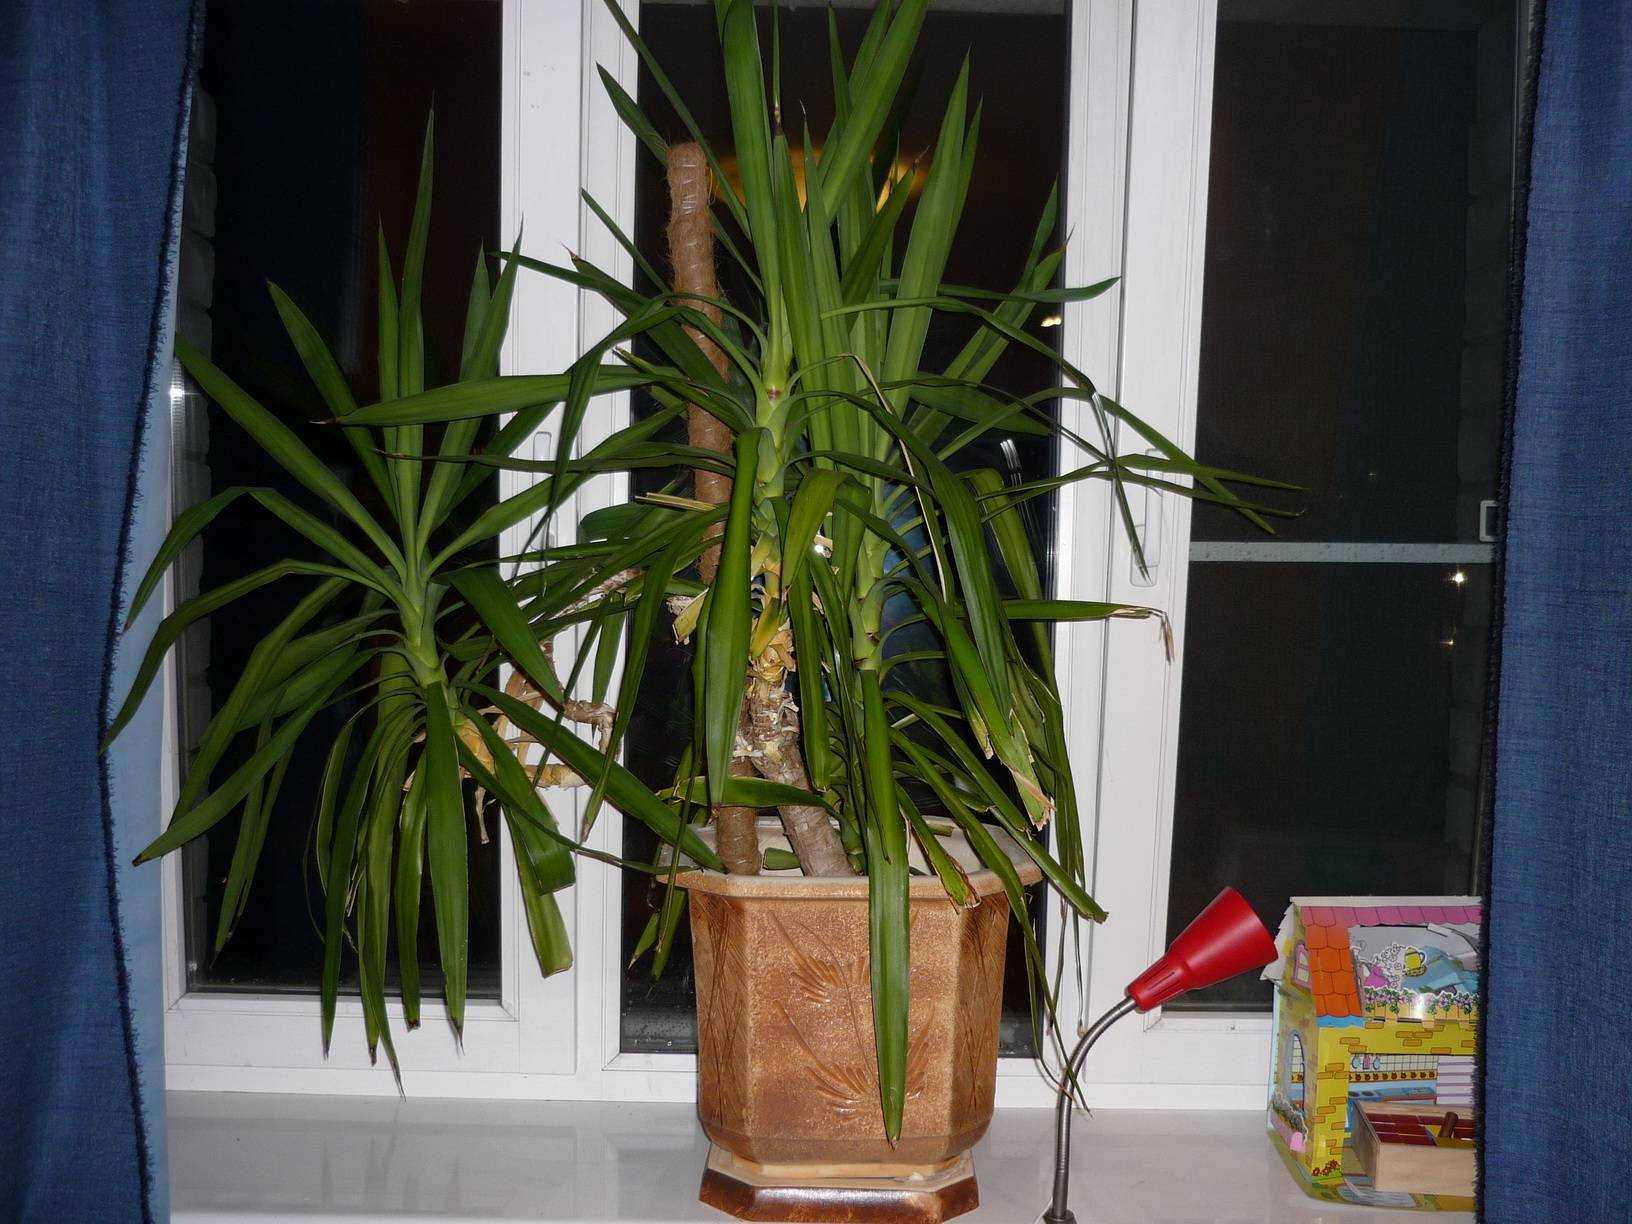 Комнатная пальма юкка: все про уход за растением